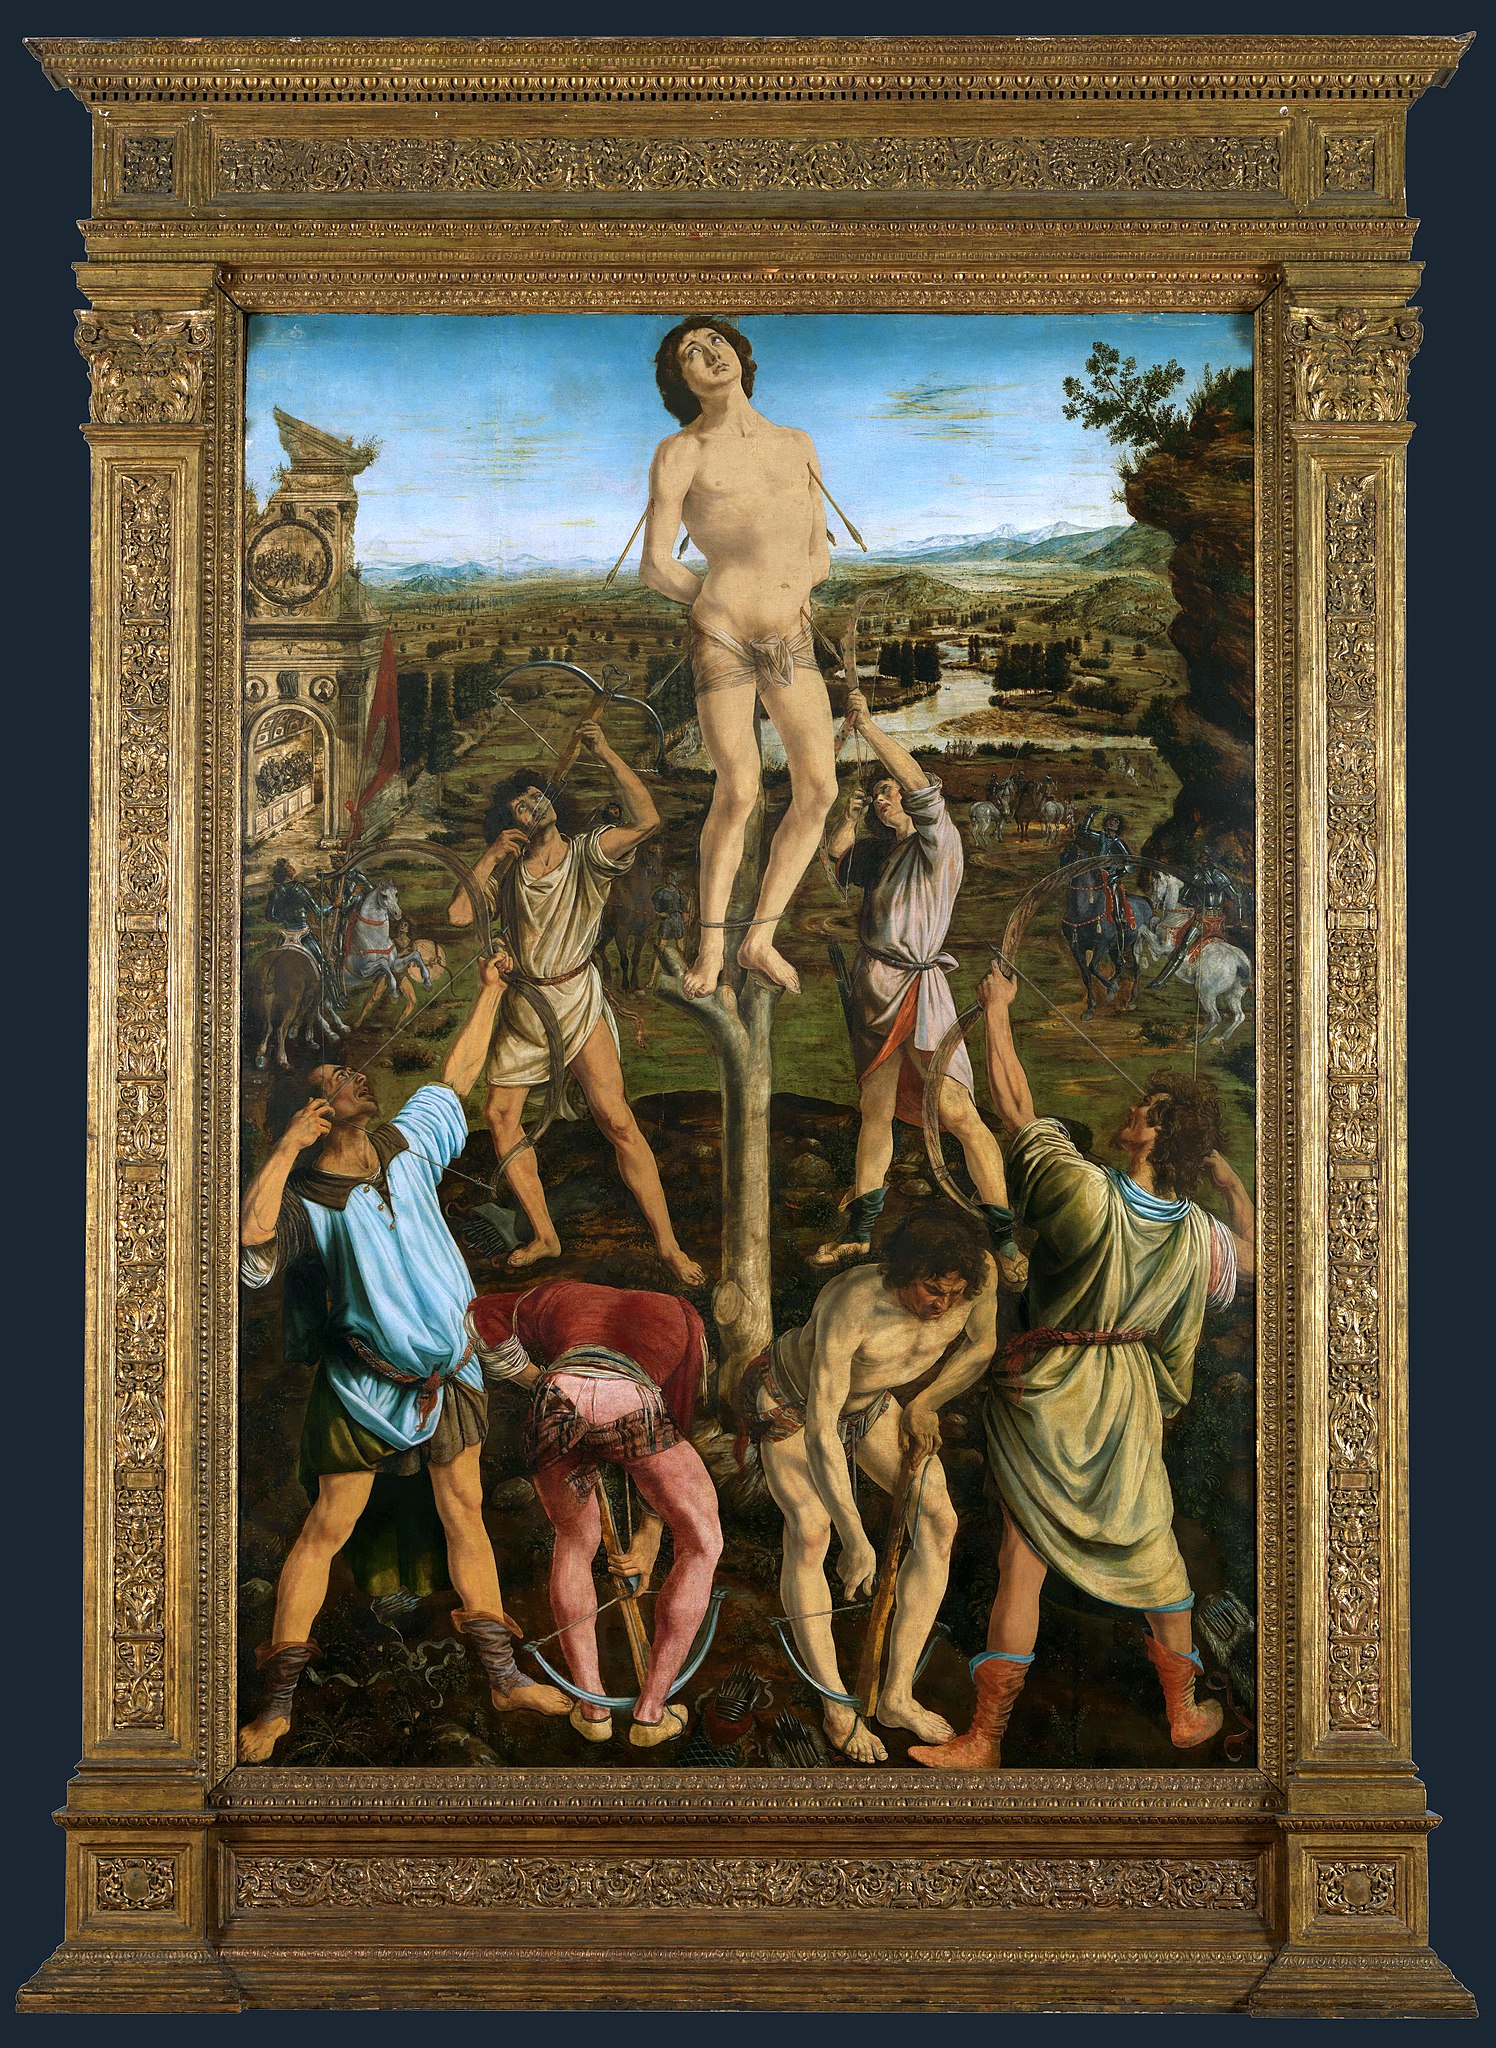 Martyrdom of Saint Sebastian by Antonio and Piero del Pollaiolo - after 1475 - 291.5 cm × 202.6 cm National Gallery